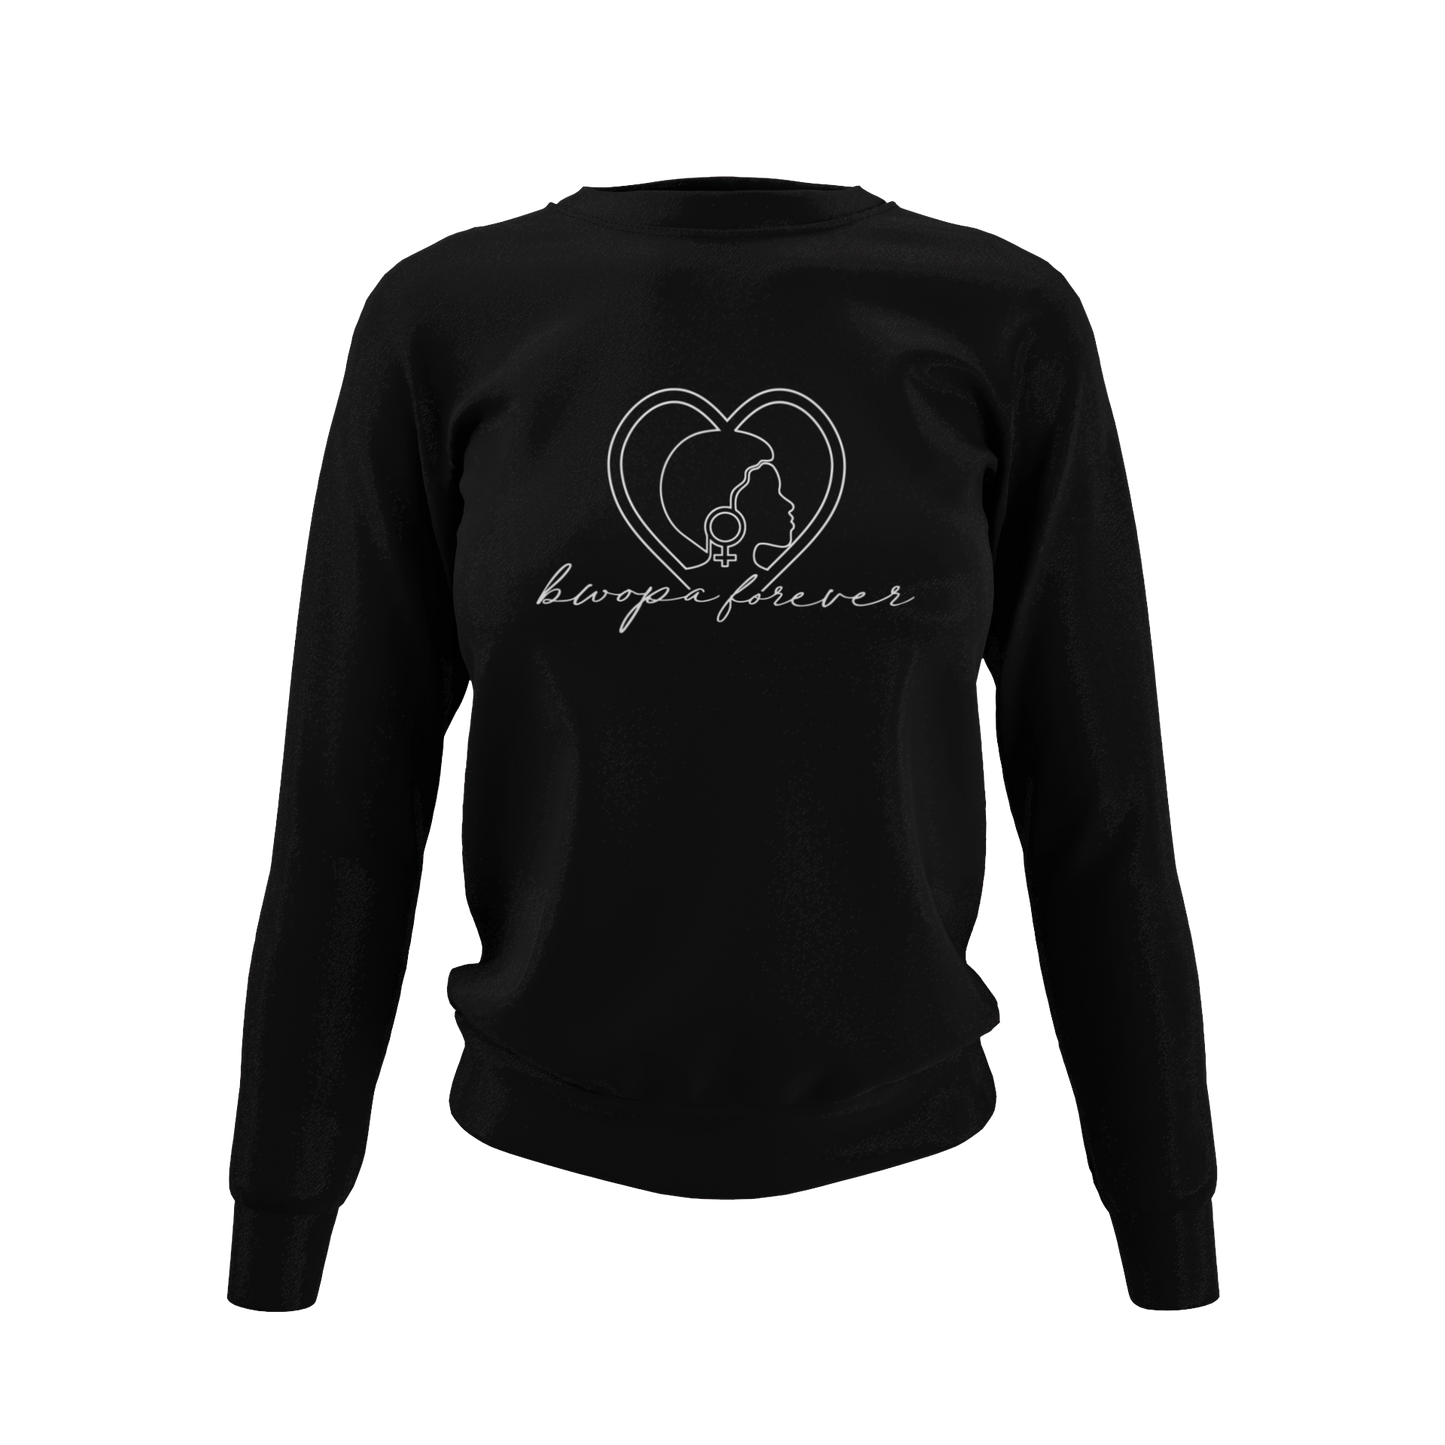 BWOPA Forever Sweatshirt (Big Heart)